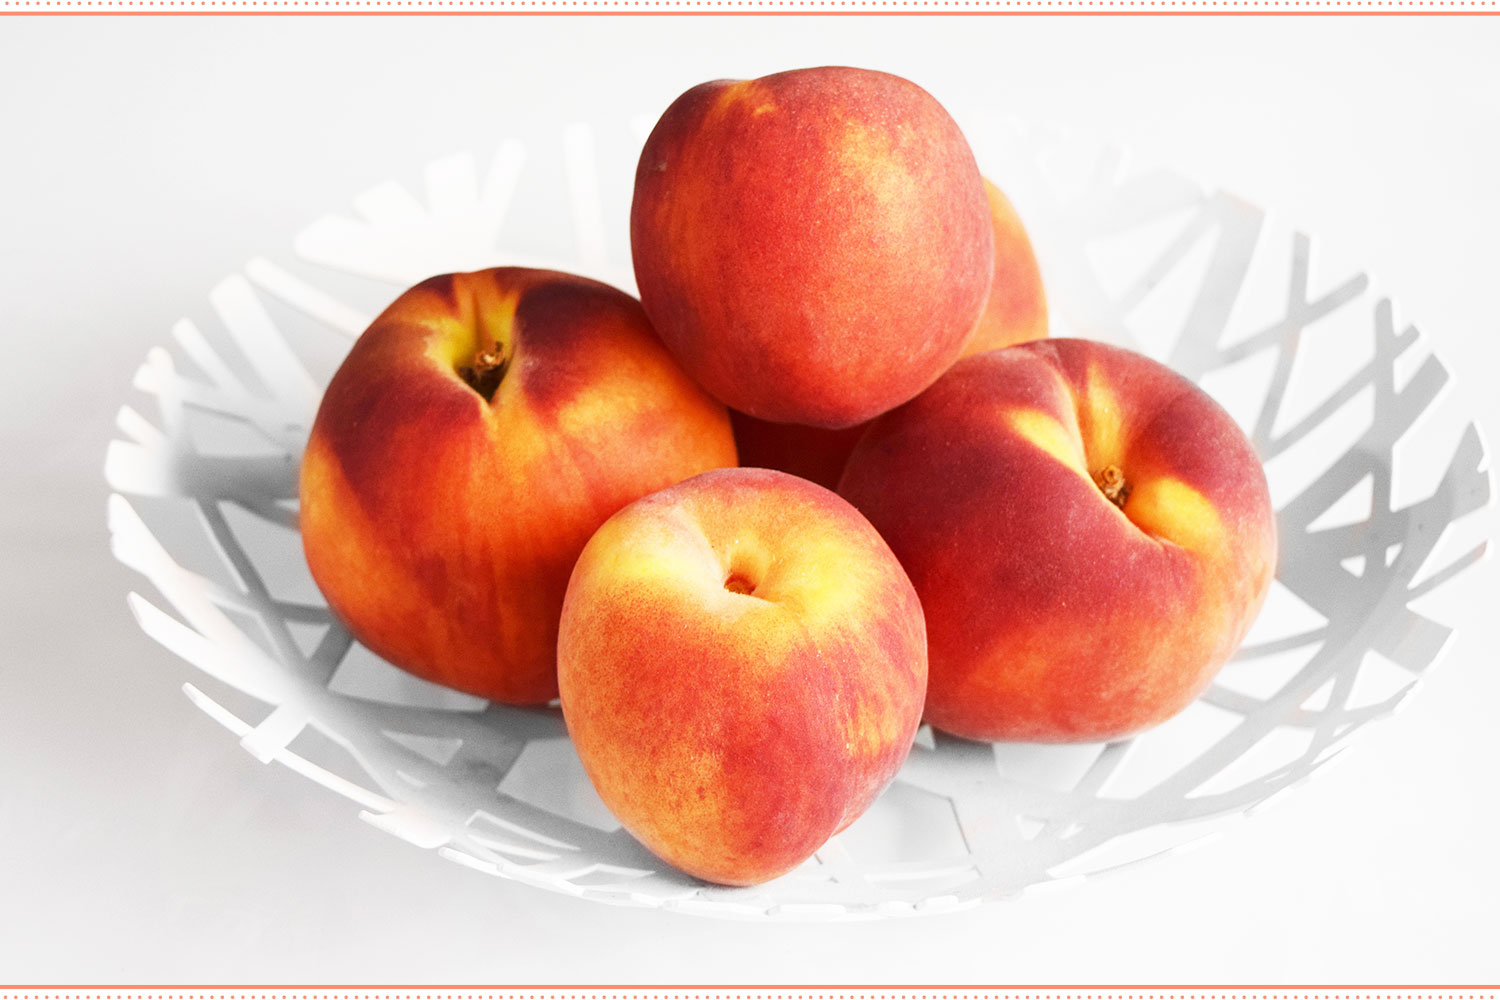 https://www.berries.com/blog/wp-content/uploads/2019/05/types-of-fruit-peach.jpg